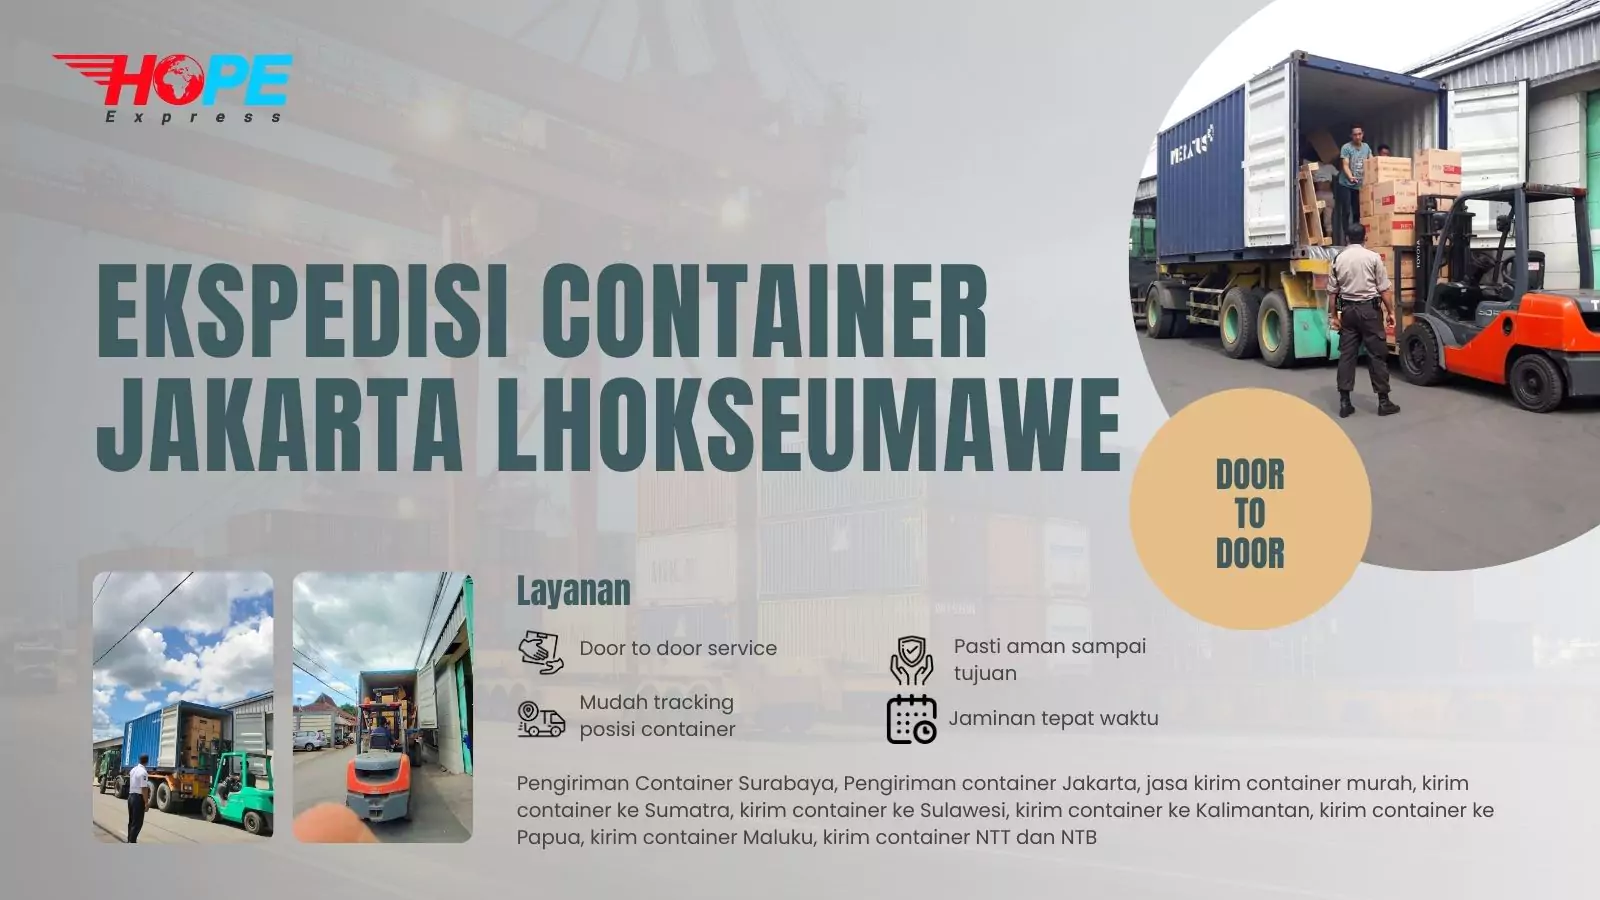 Ekspedisi Container Jakarta Lhokseumawe